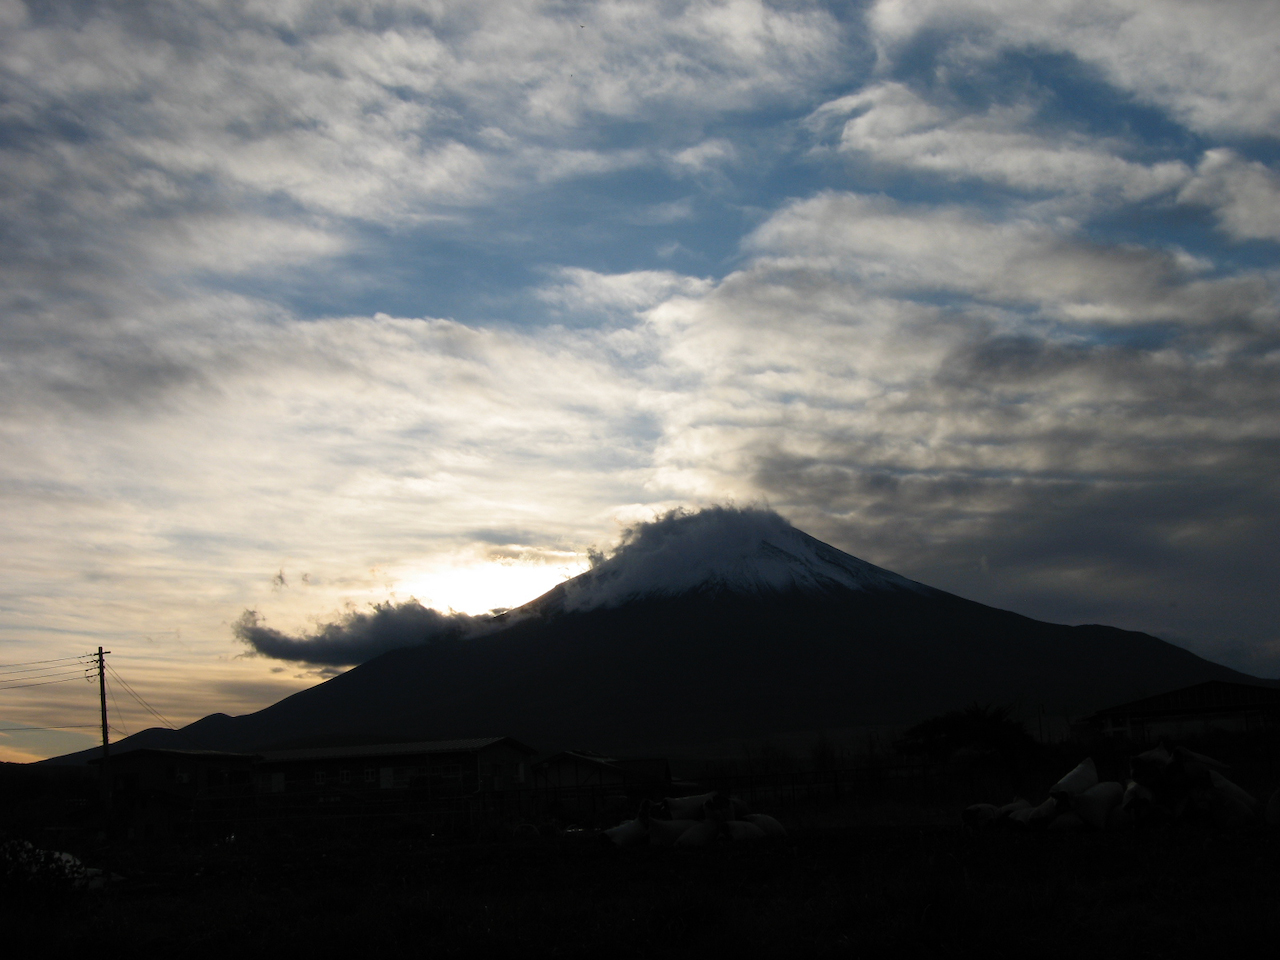 Mt. Fuji at sunset